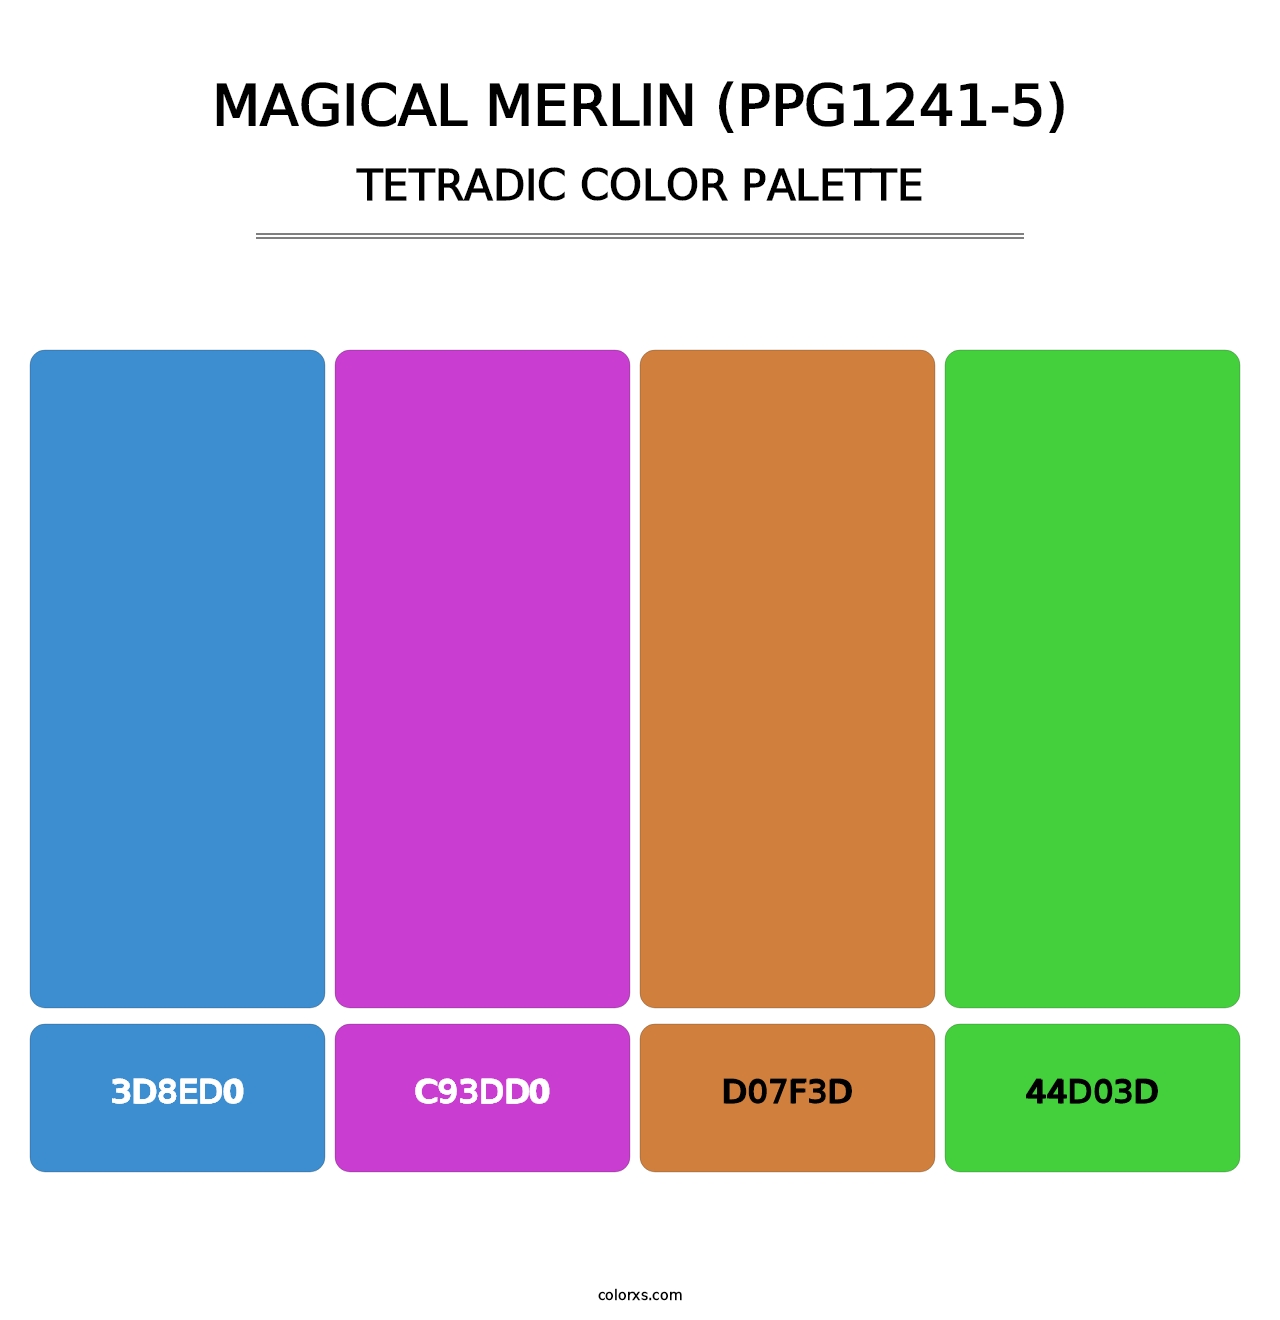 Magical Merlin (PPG1241-5) - Tetradic Color Palette